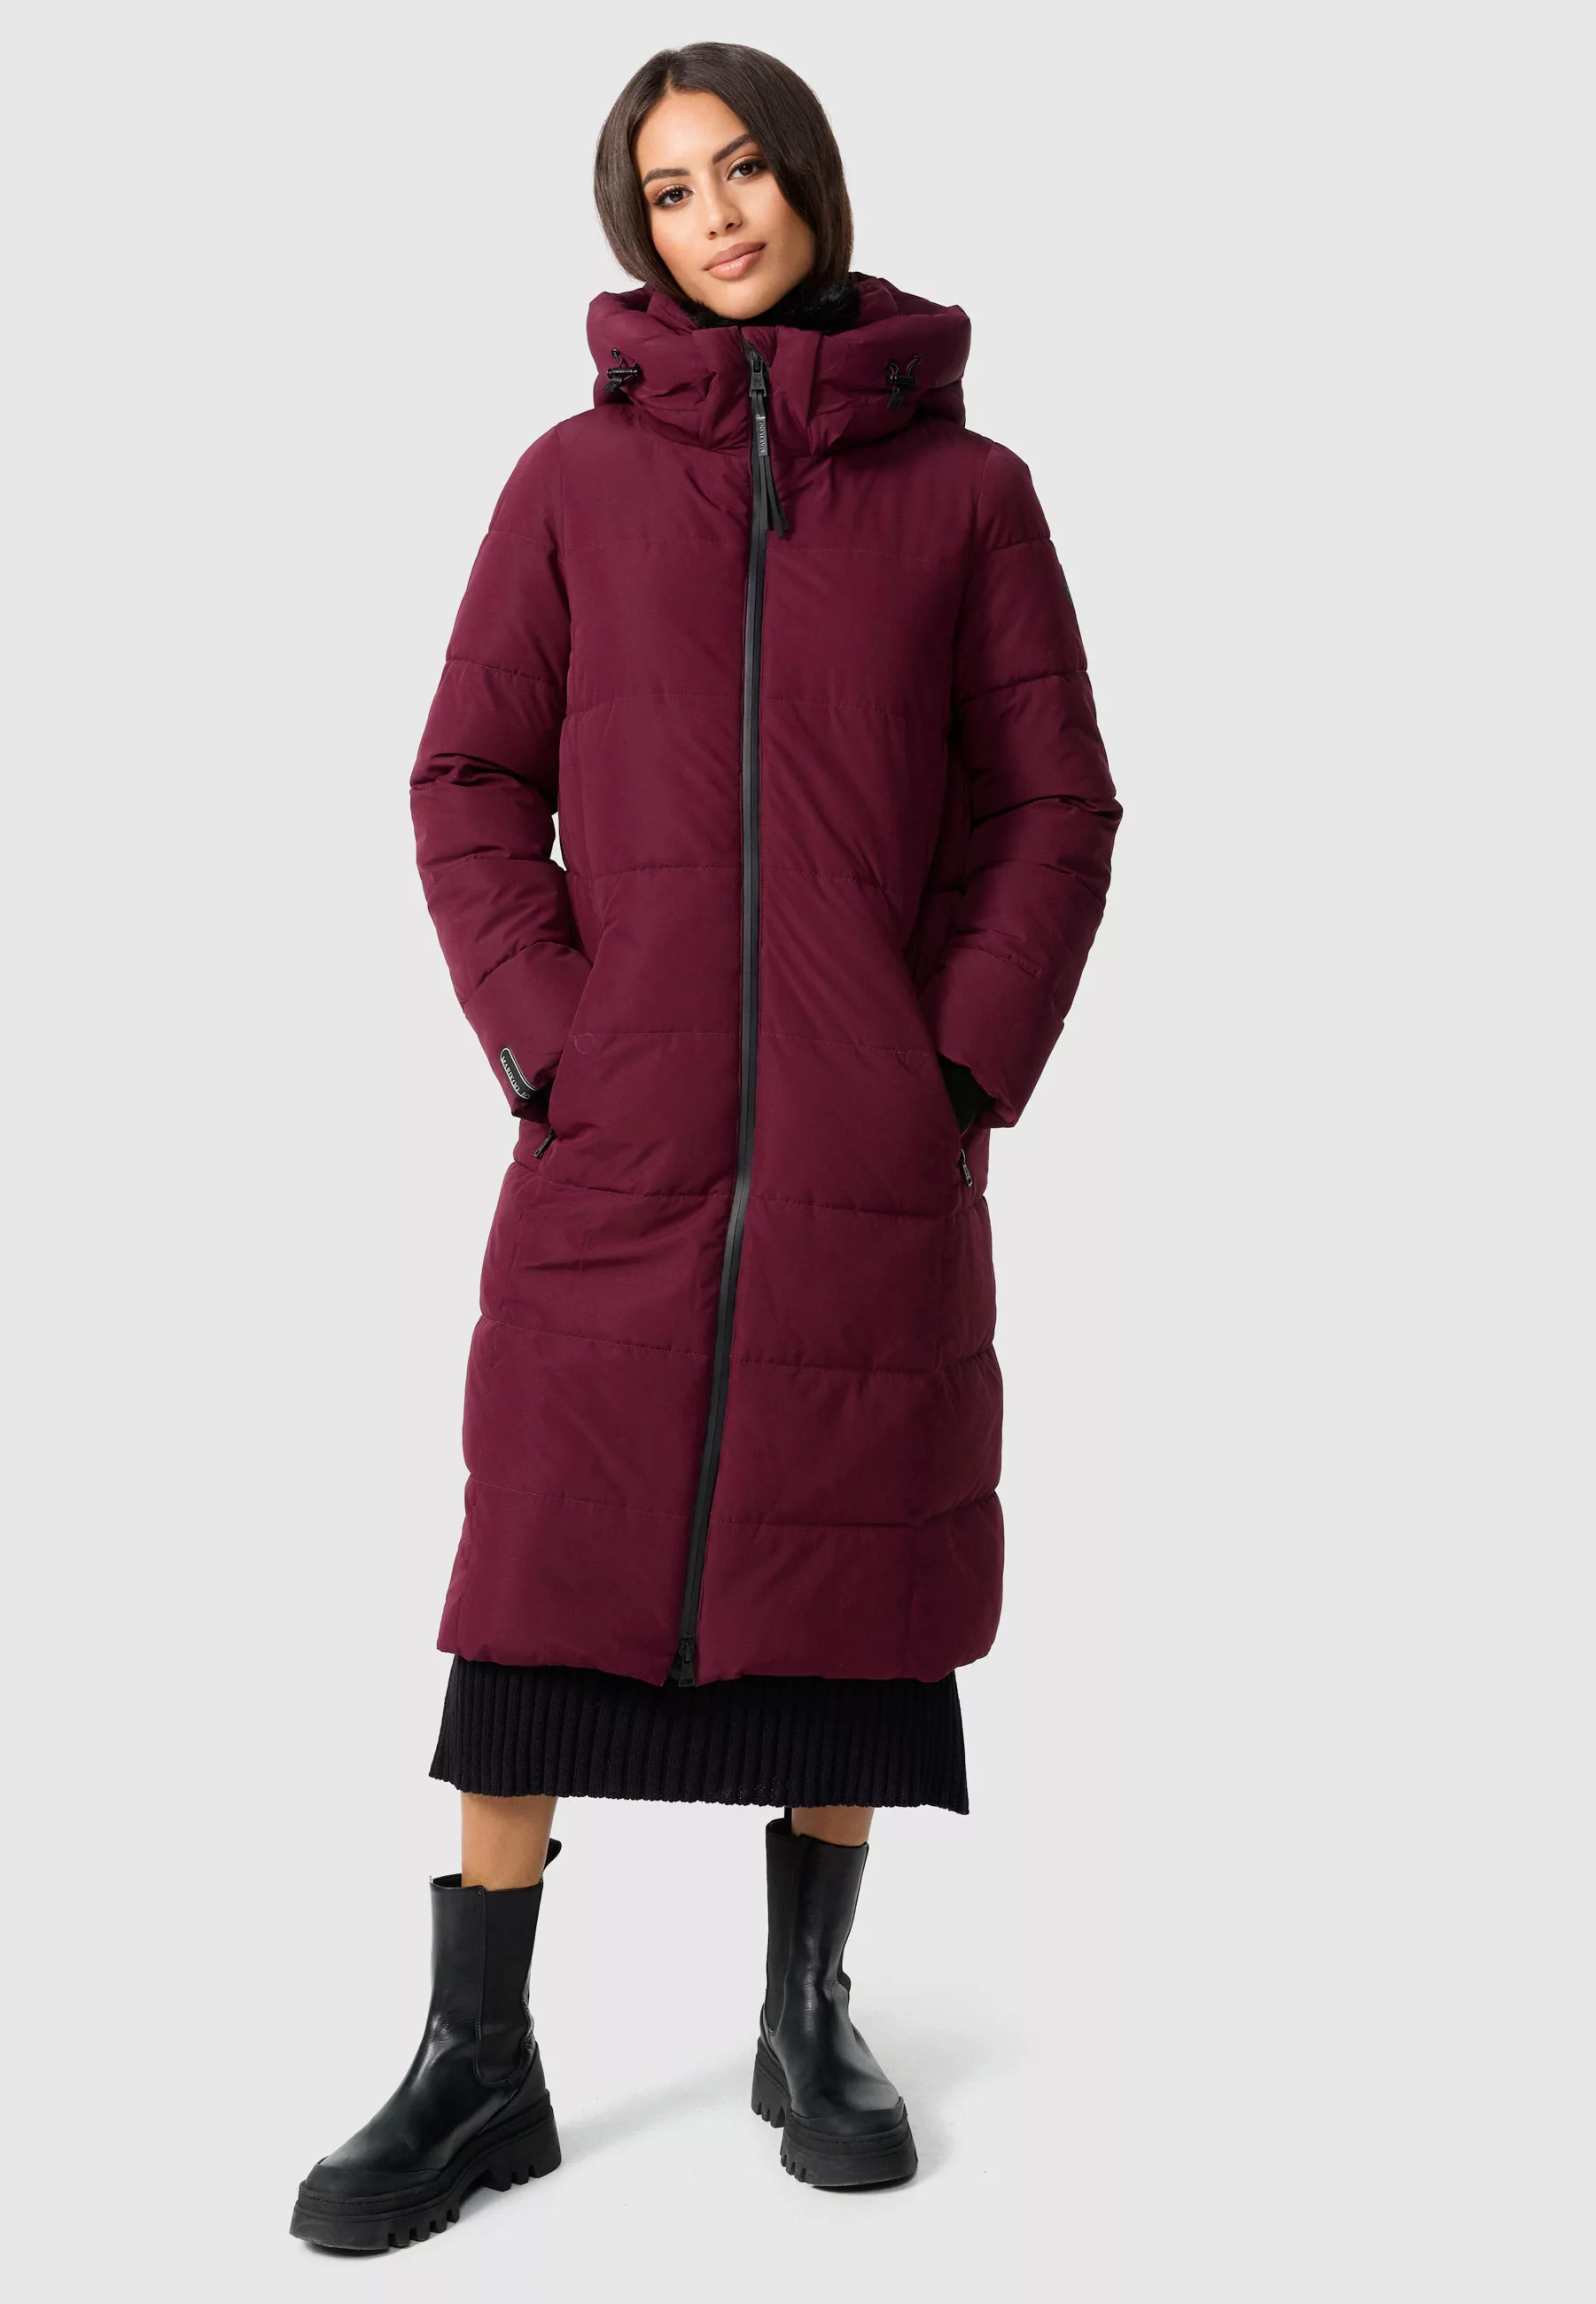 Marikoo Steppjacke Zuraraa XVI langer Winter Mantel gesteppt günstig online kaufen